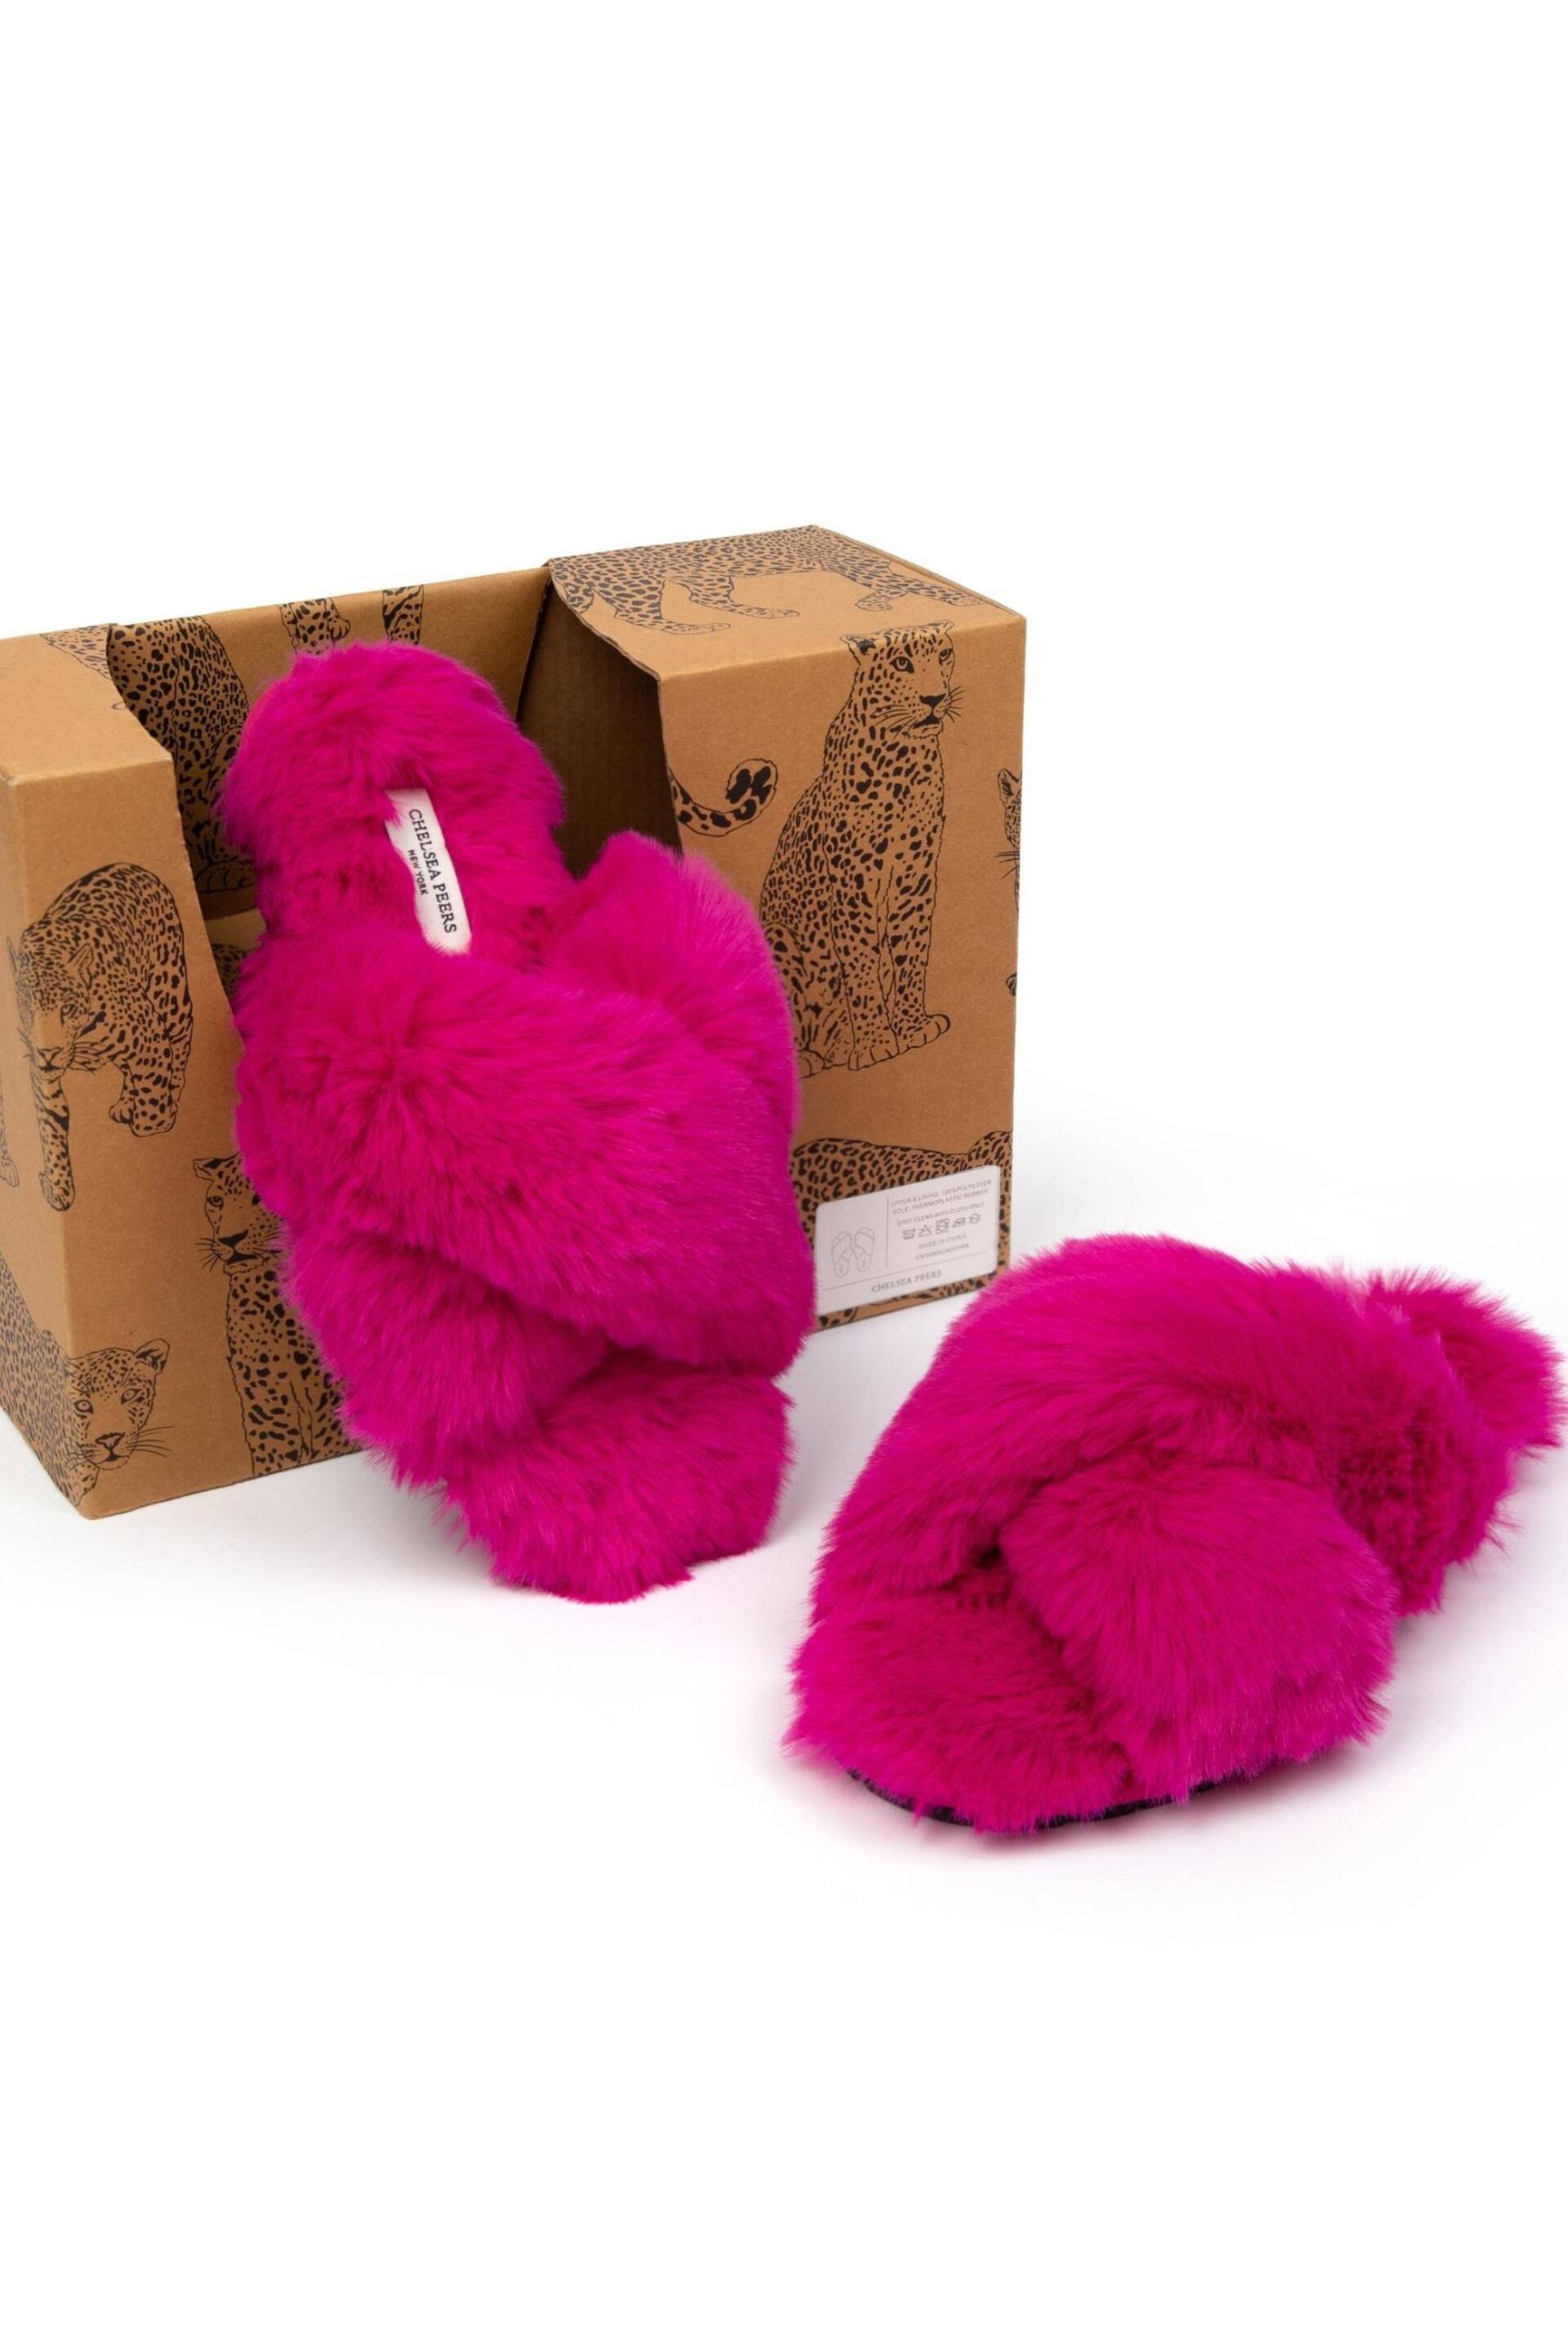 Chelsea Peers Pink Regular Fit Fluffy Cross Strap Slider Slippers - Image 5 of 5